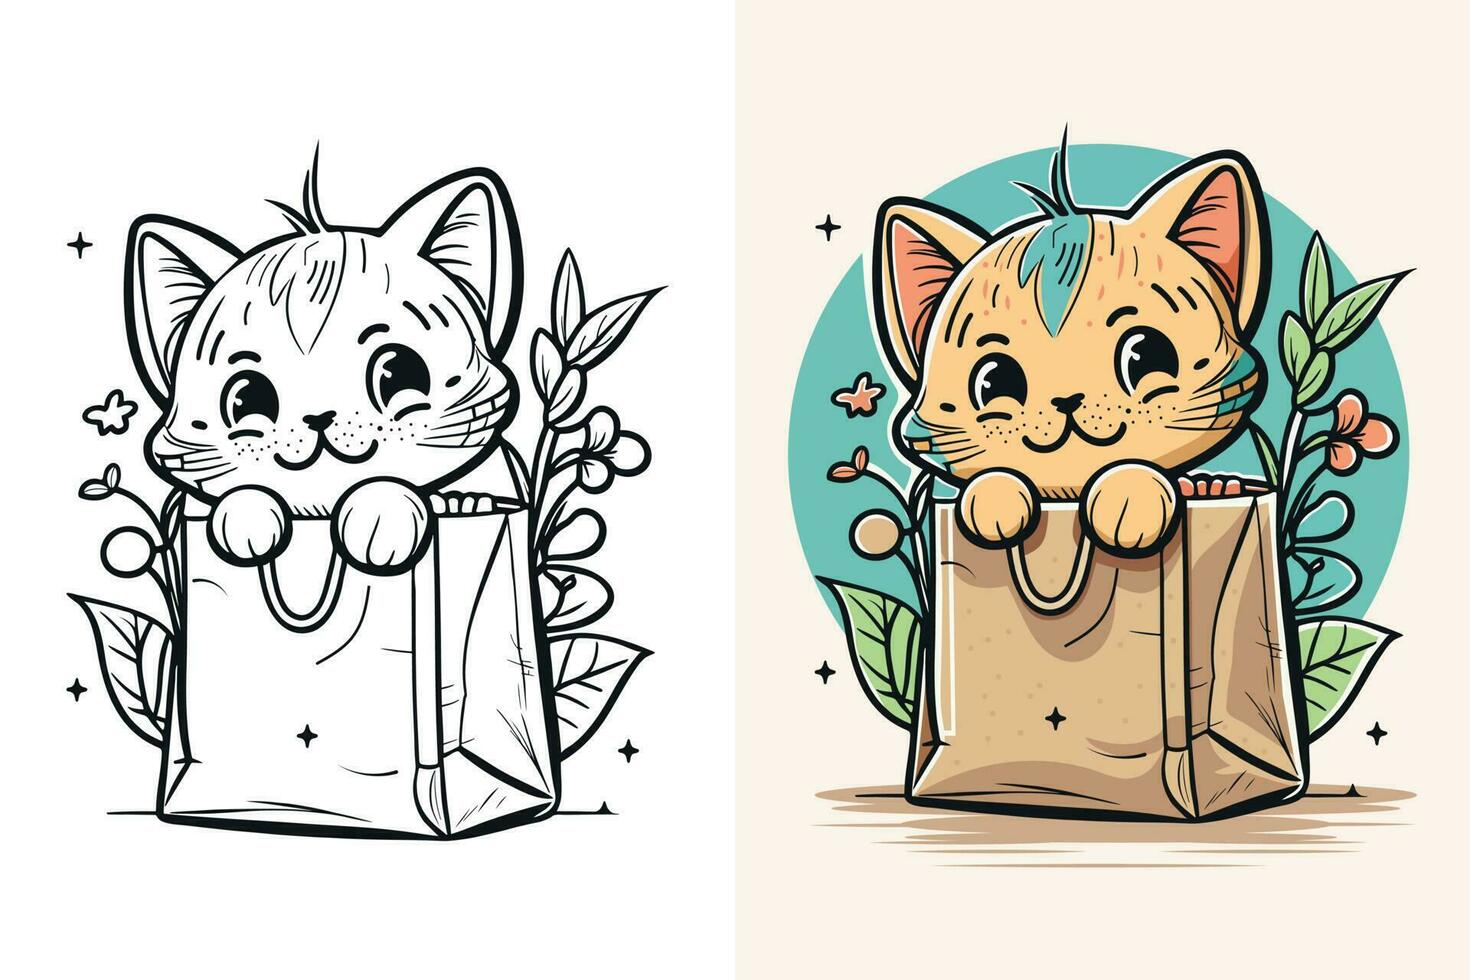 The character of a Little cat in a paper shopping bag, Cute cat, Cat cartoon, Cat drawing, Cat mascot vector